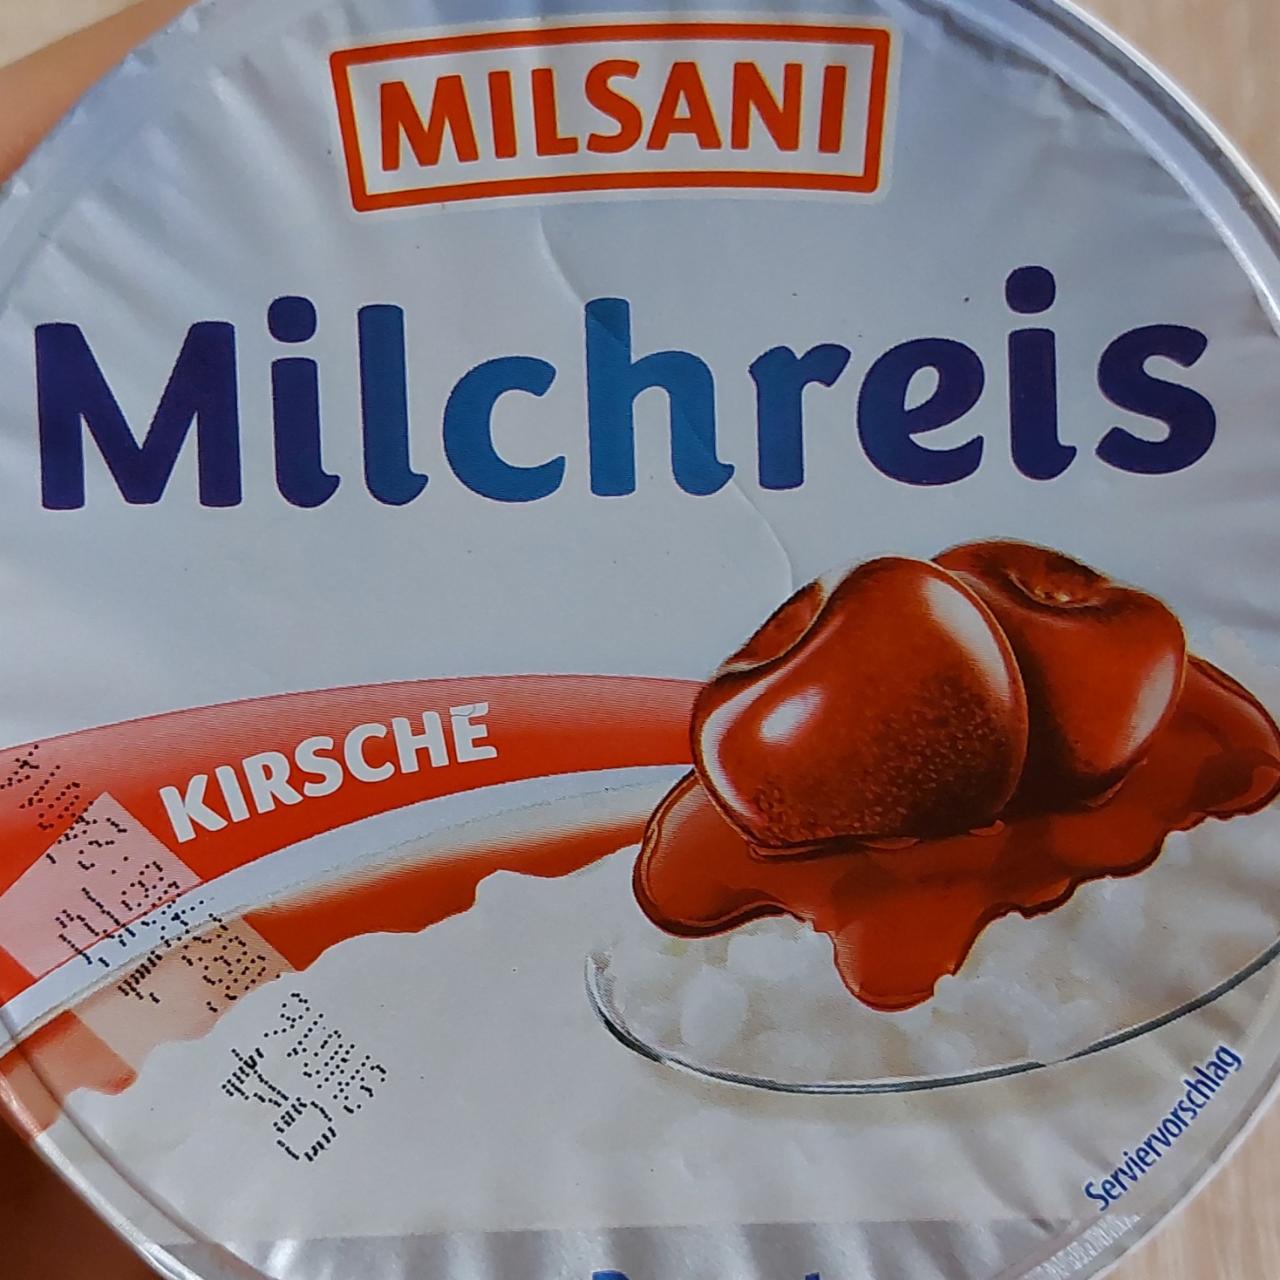 Фото - рисовая молочная каша с вишней Milchreis Milsani